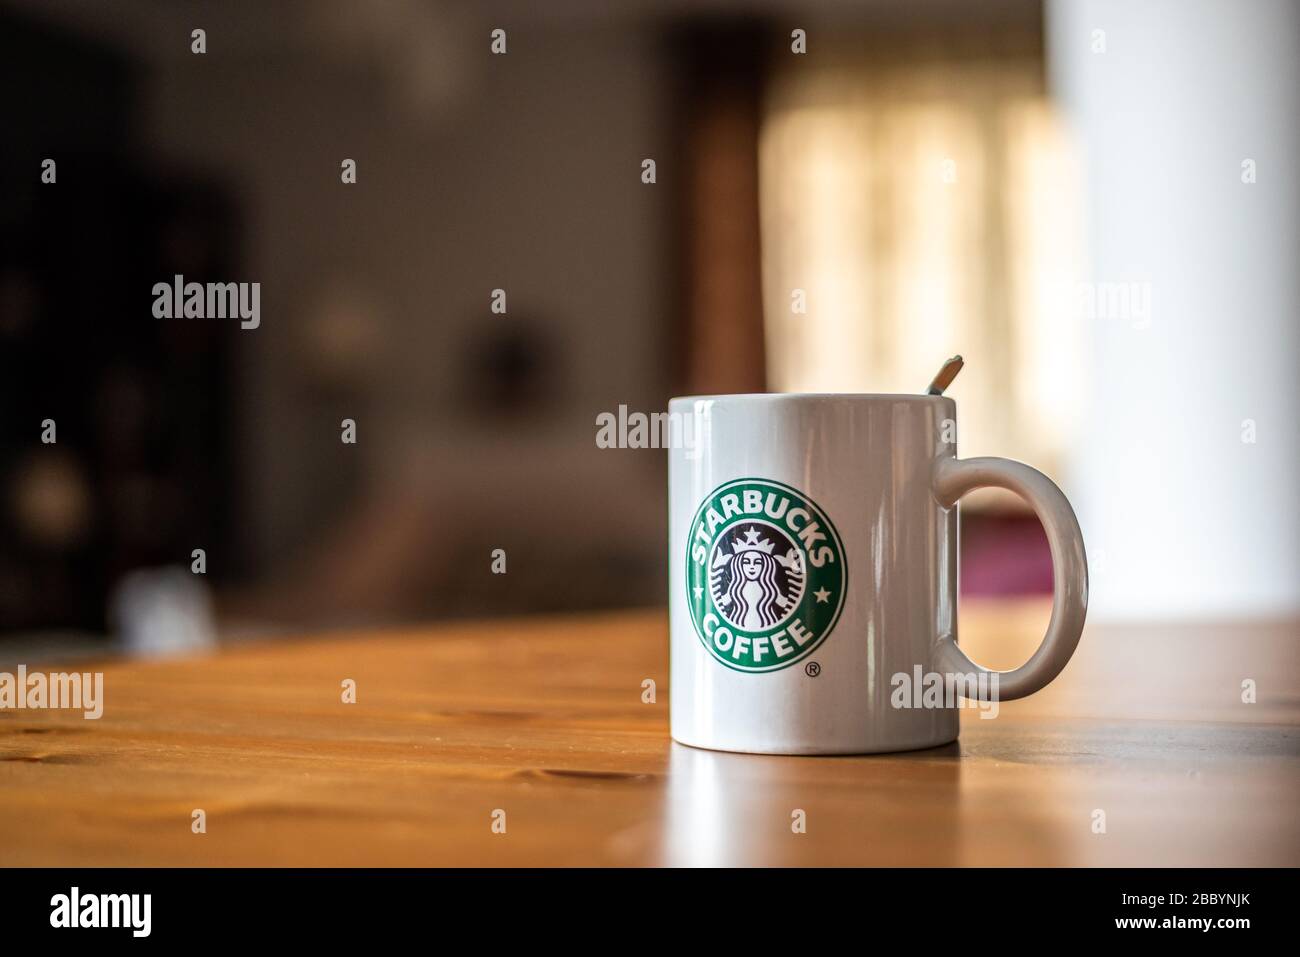 https://c8.alamy.com/comp/2BBYNJK/starbucks-glass-coffee-mug-on-wooden-table-2BBYNJK.jpg